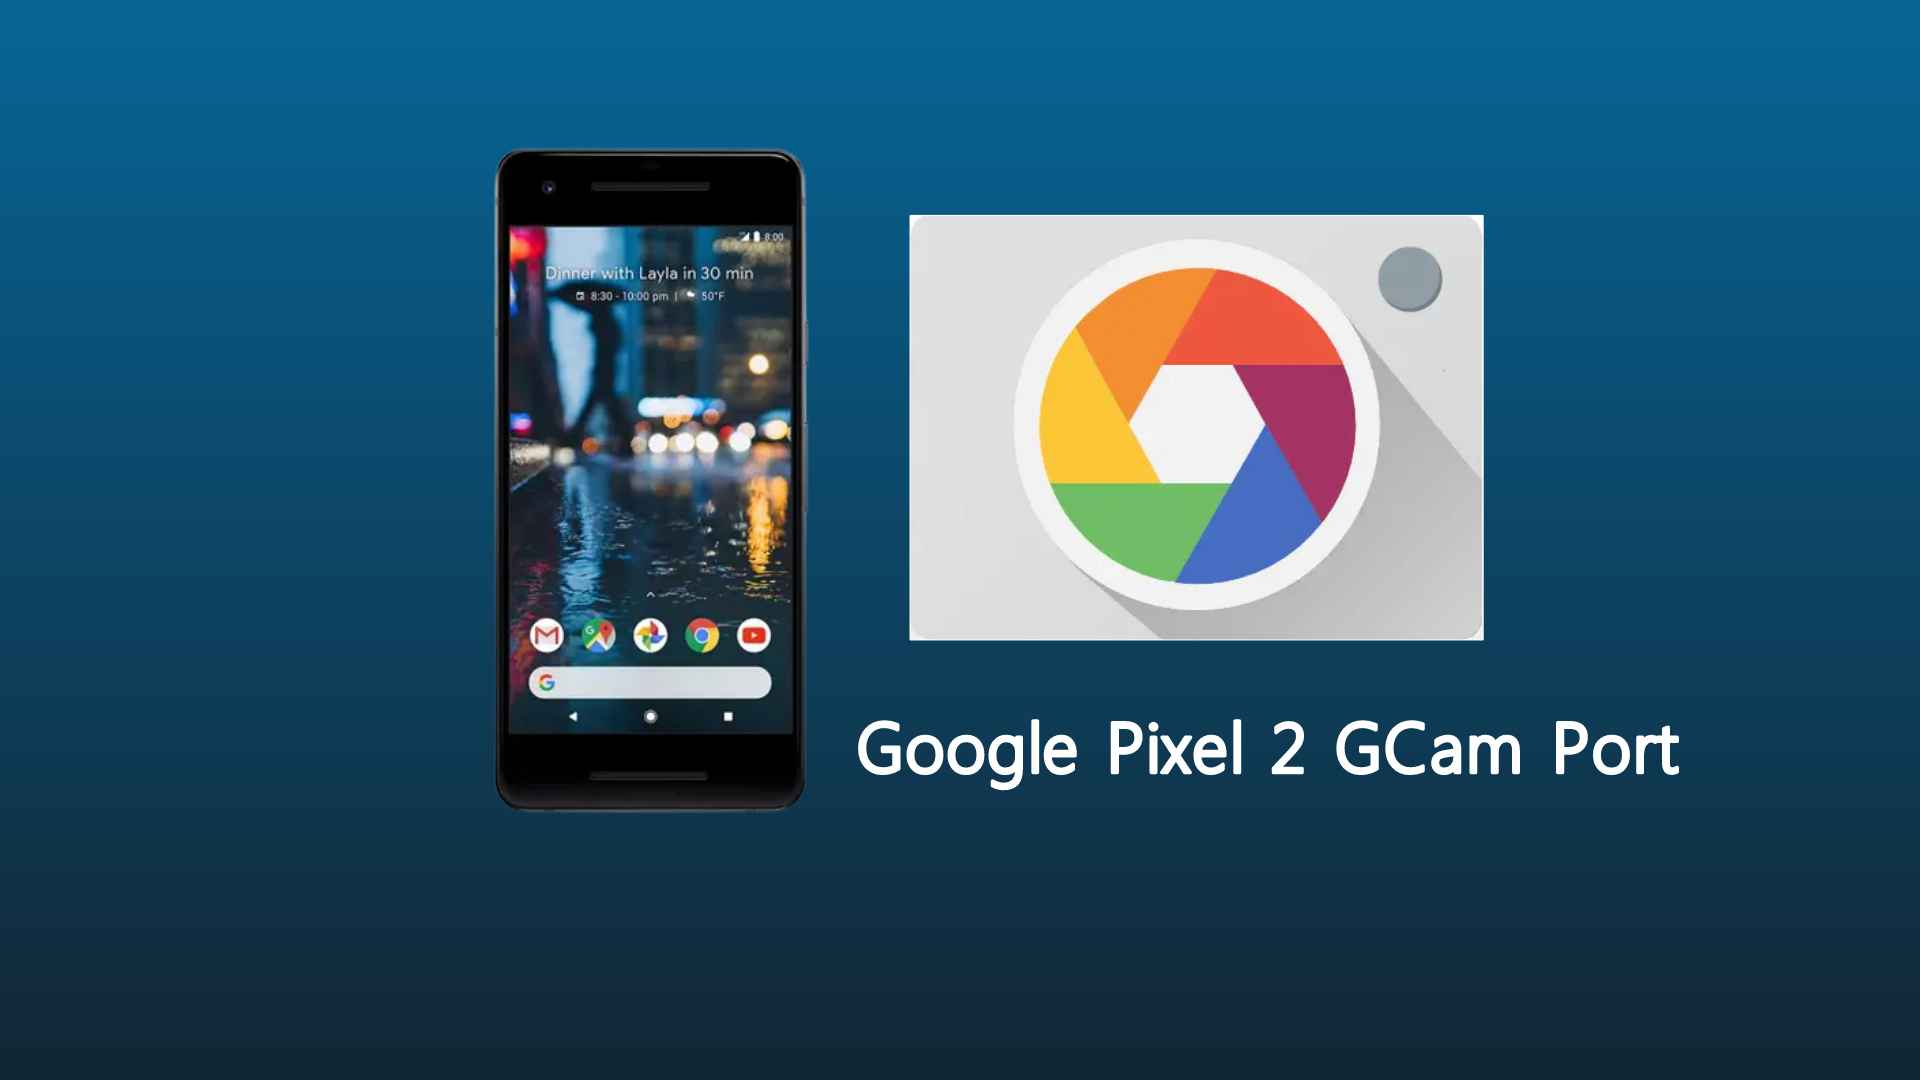 Google Pixel 2 GCam Port